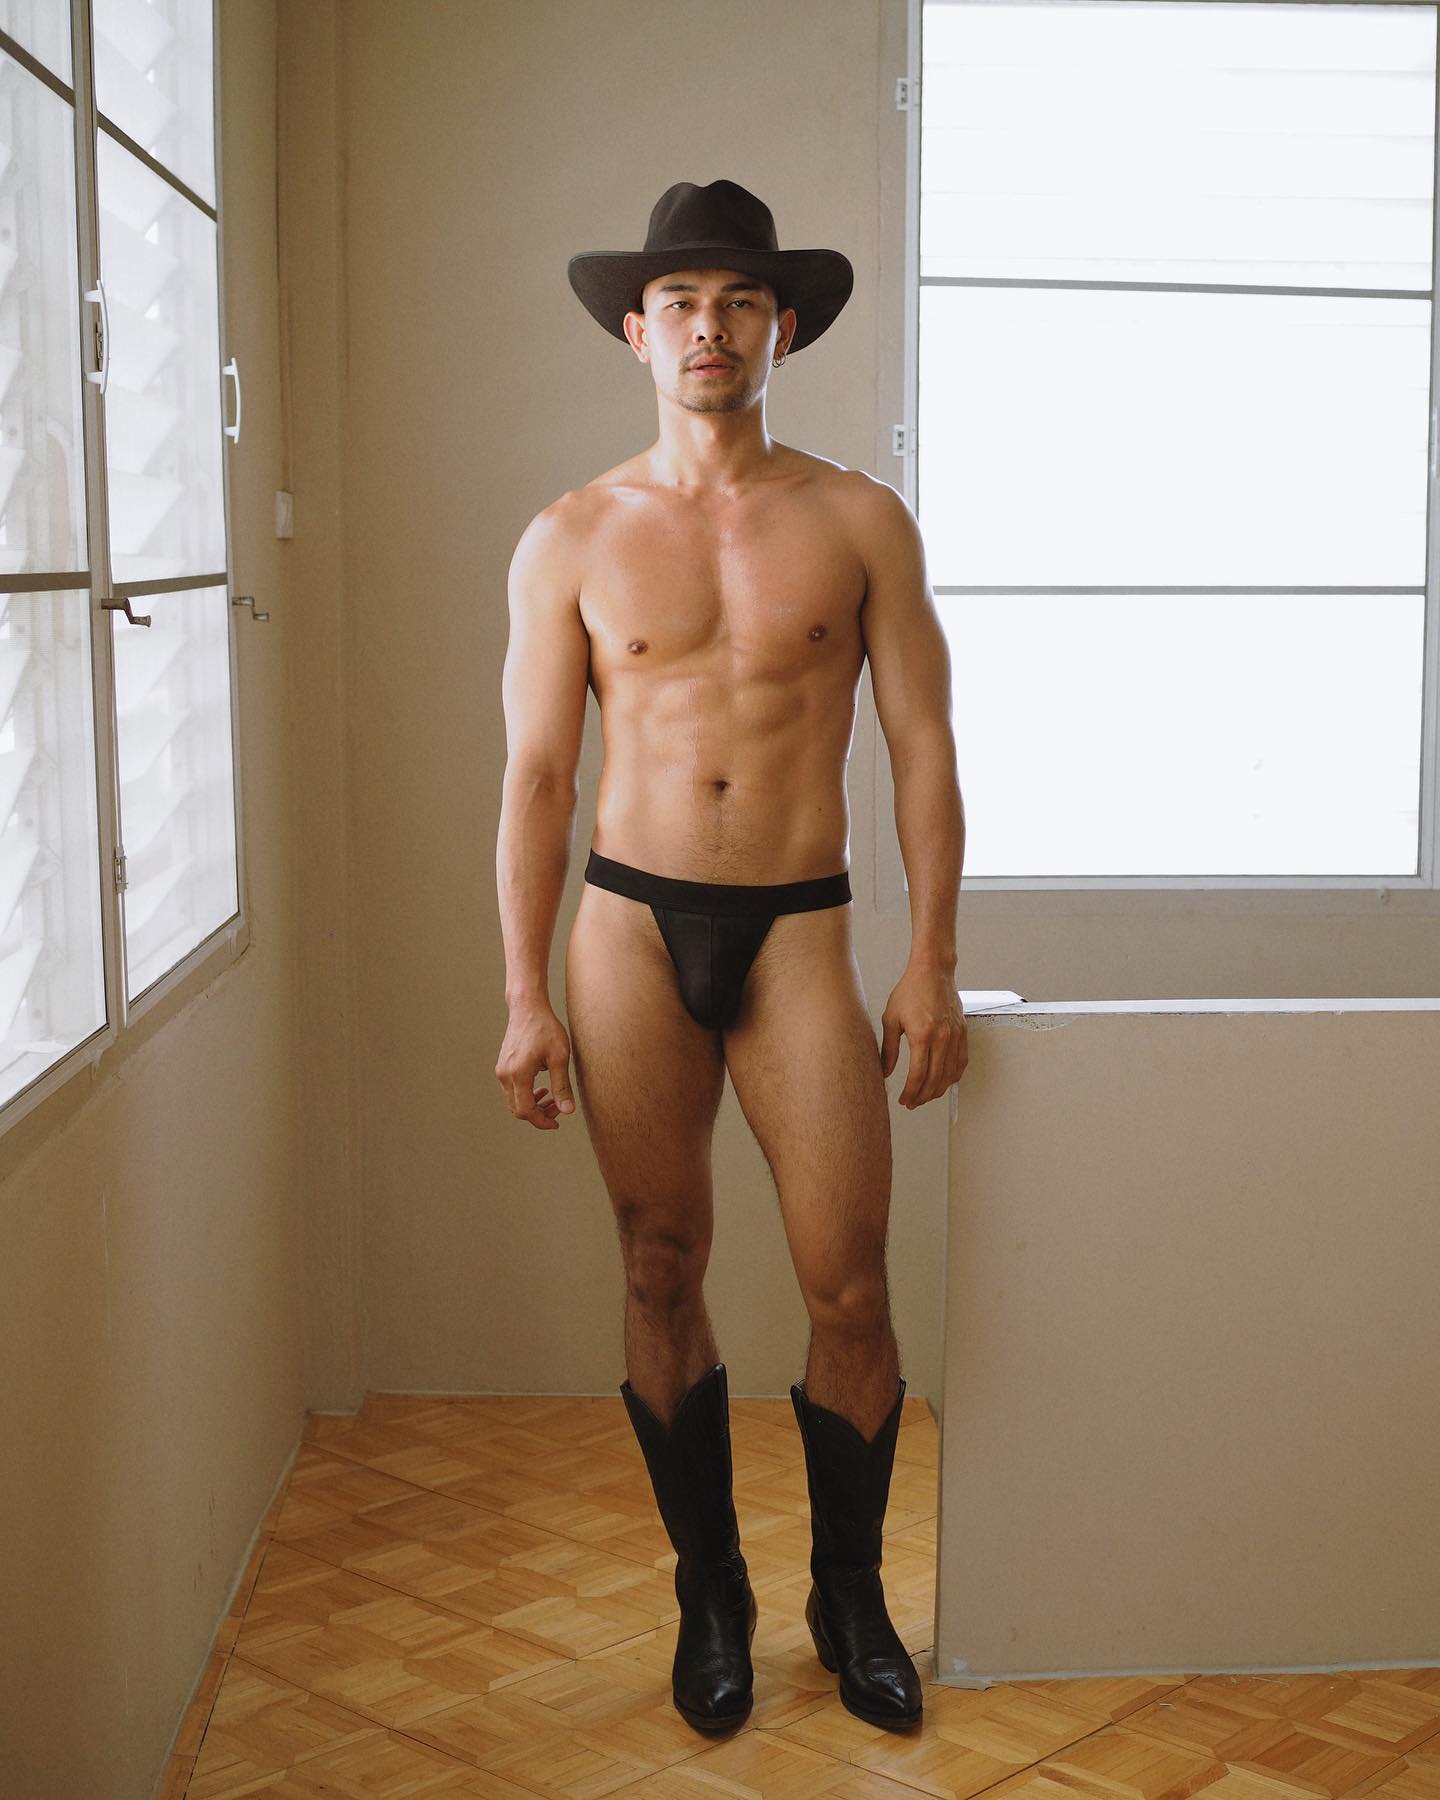 <cowboy season> 

📸 @monsieurpoppiphotography